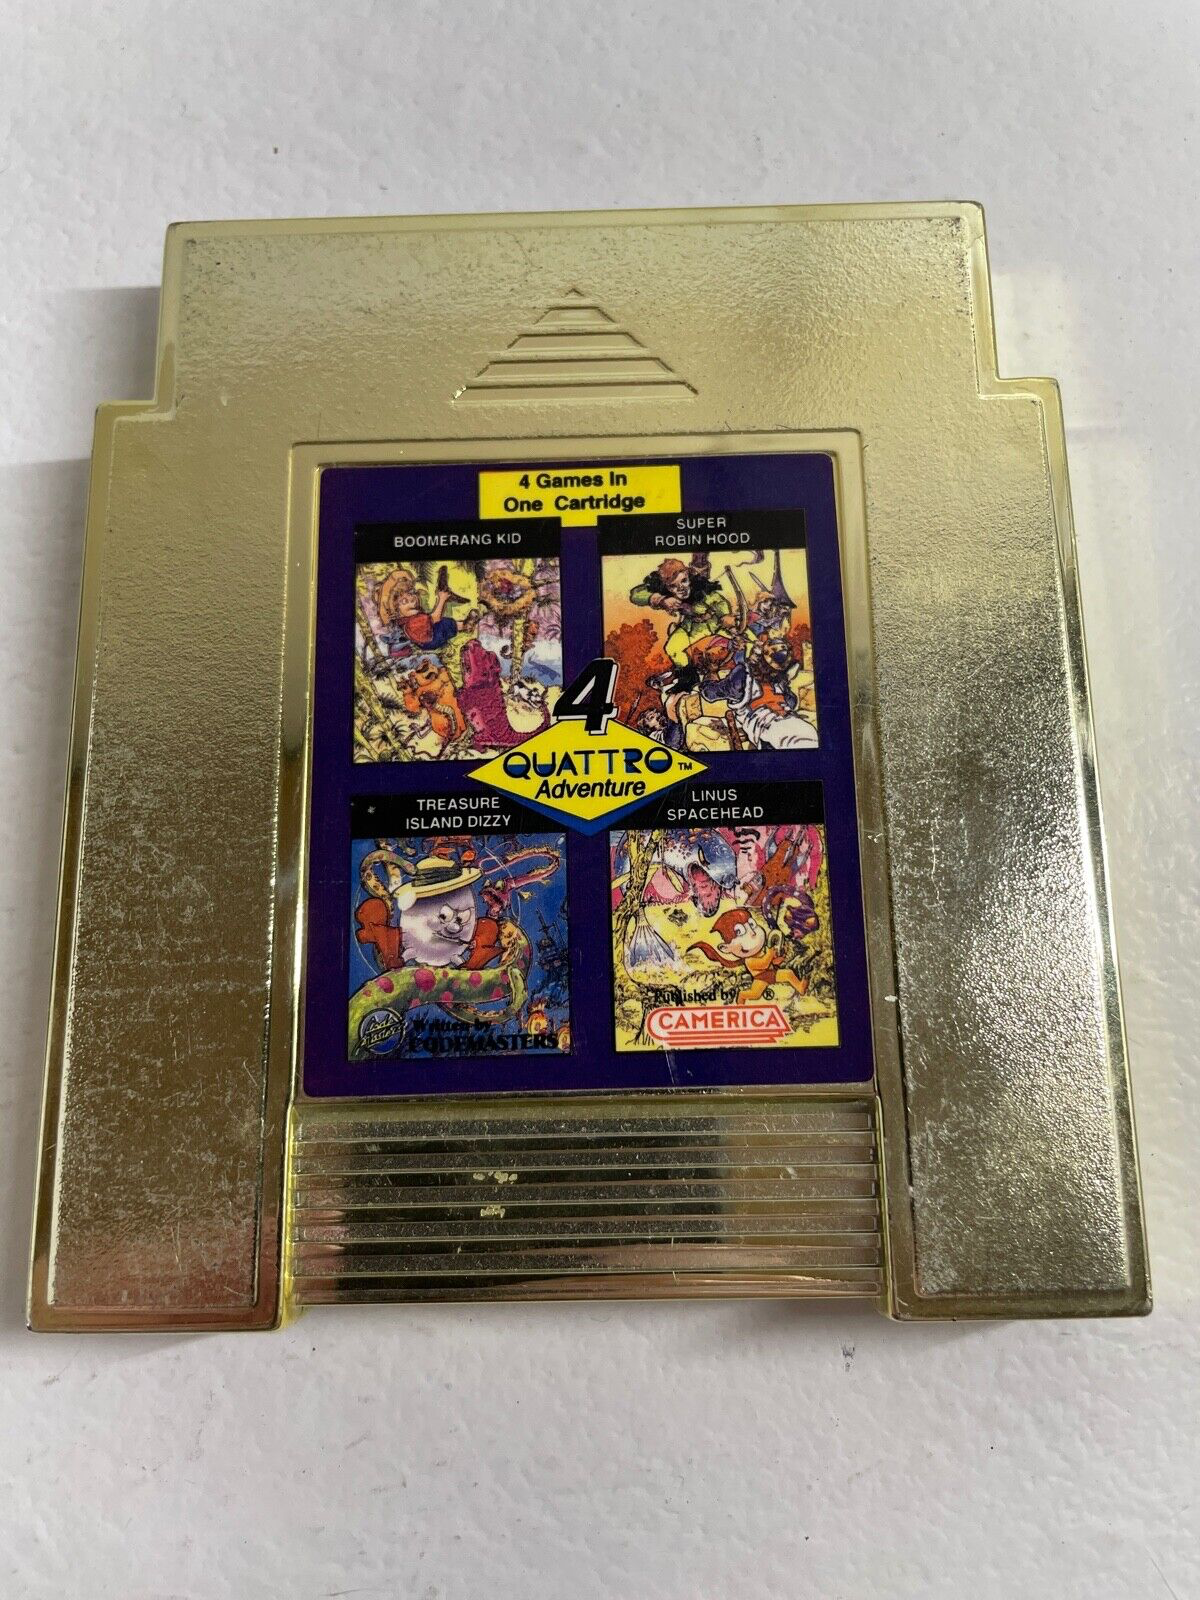 Quattro Adventure (Boomerang Kid / Super Robin Hood / Treasure Island Dizzy / Linus Spacehead) - NES